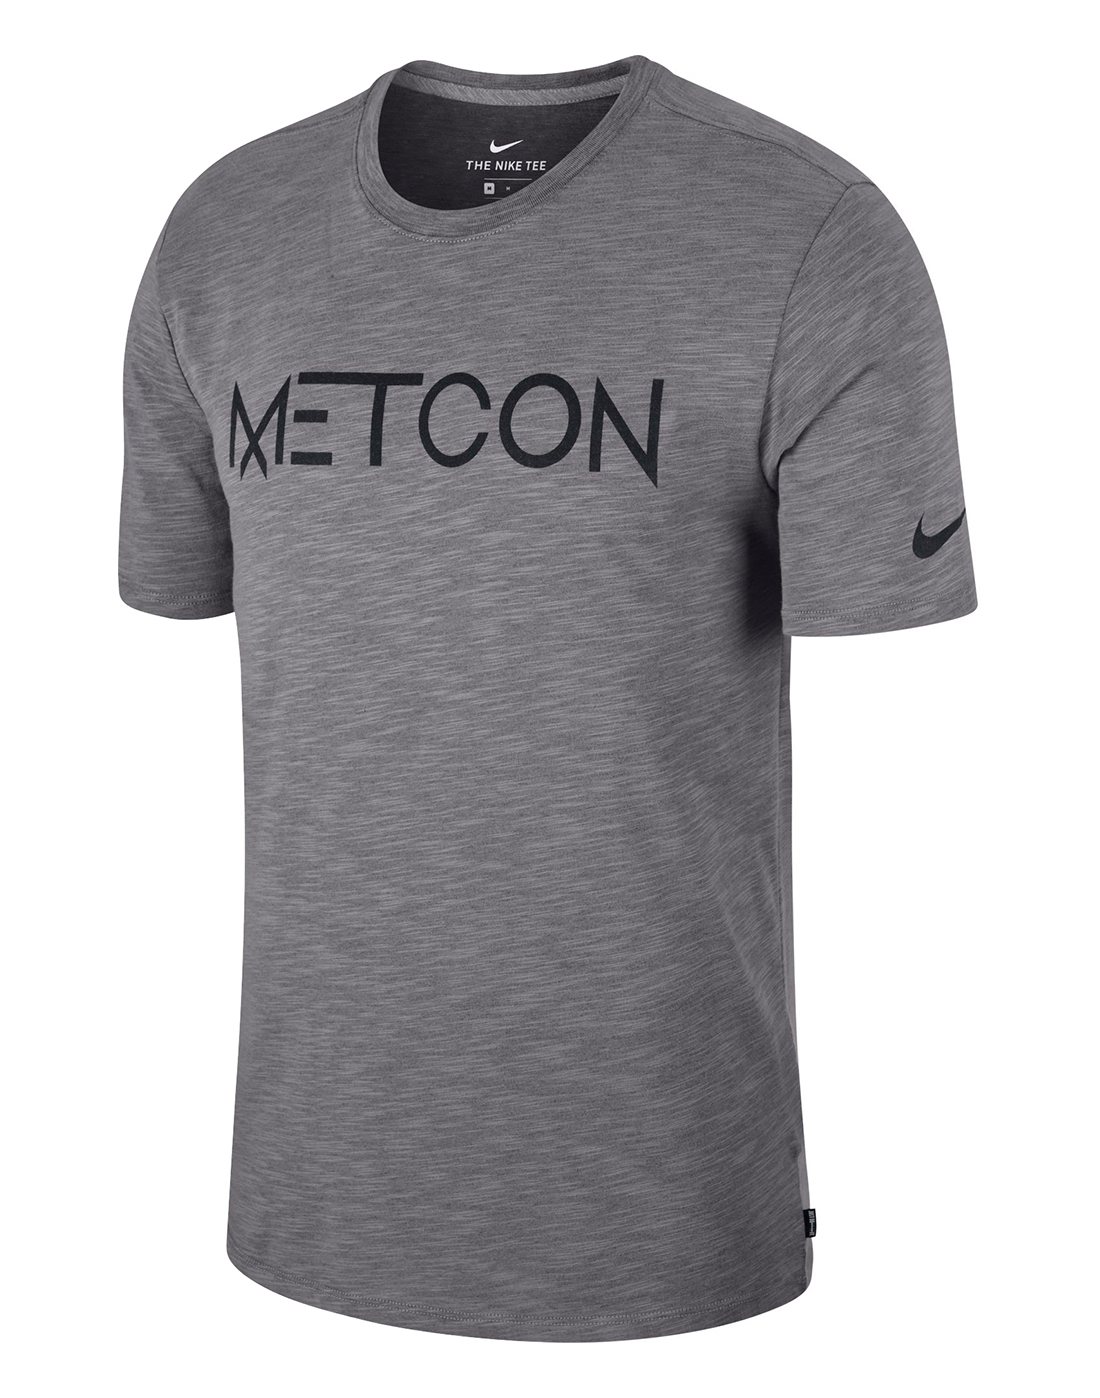 Nike Mens Dry Metcon Tee - Grey | Life Style Sports UK